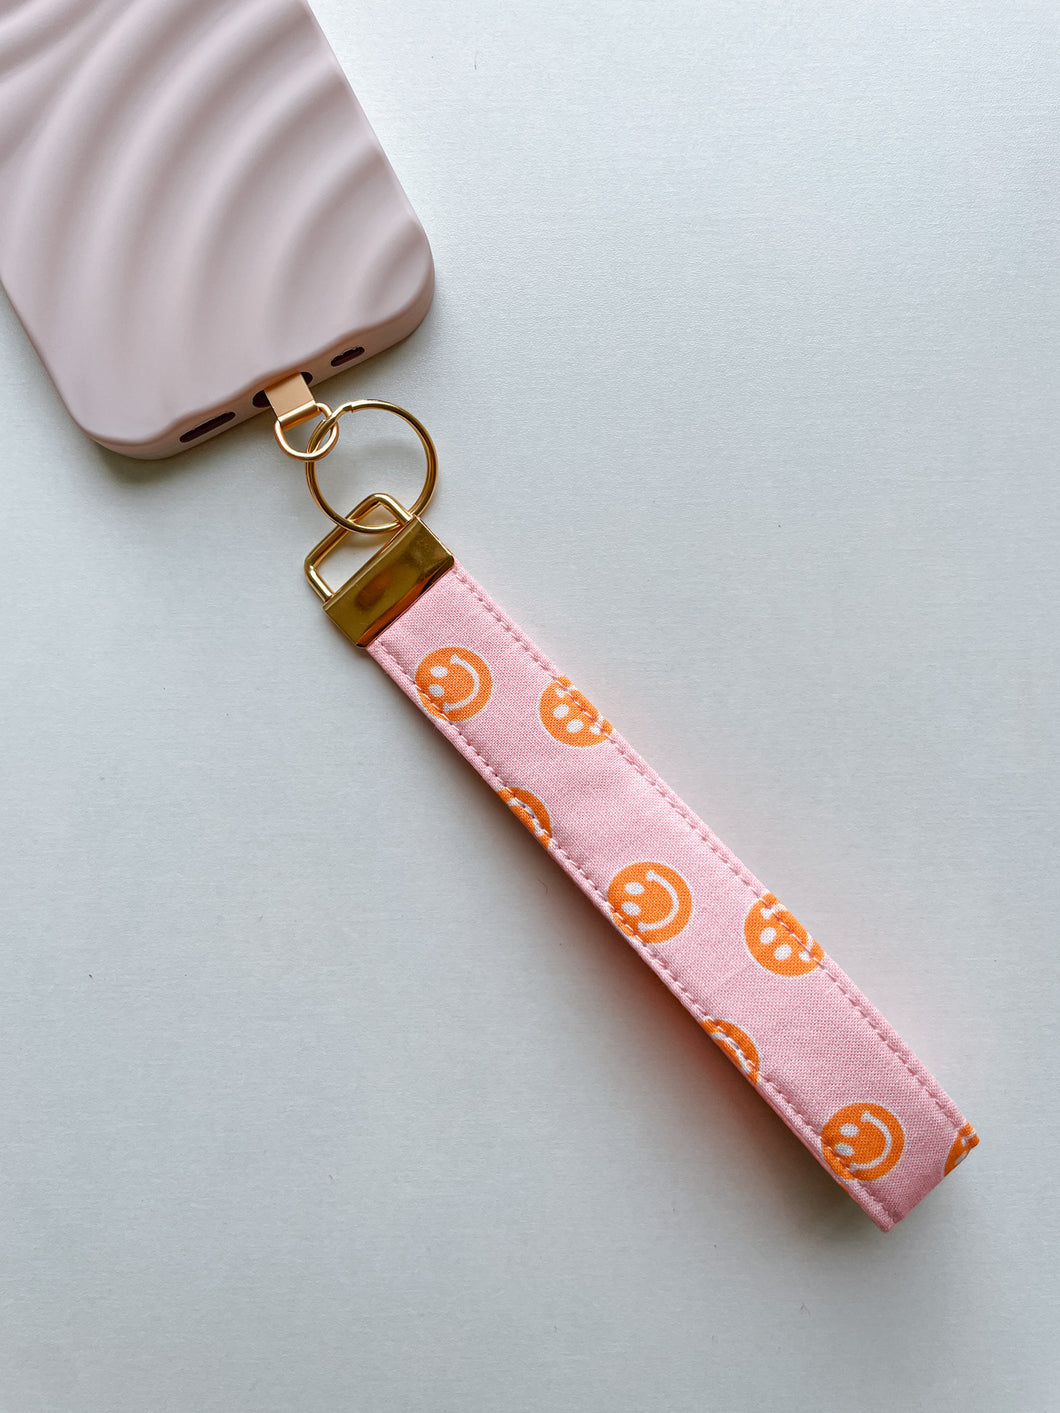 Phone Wrist Strap - pink & orange smileys